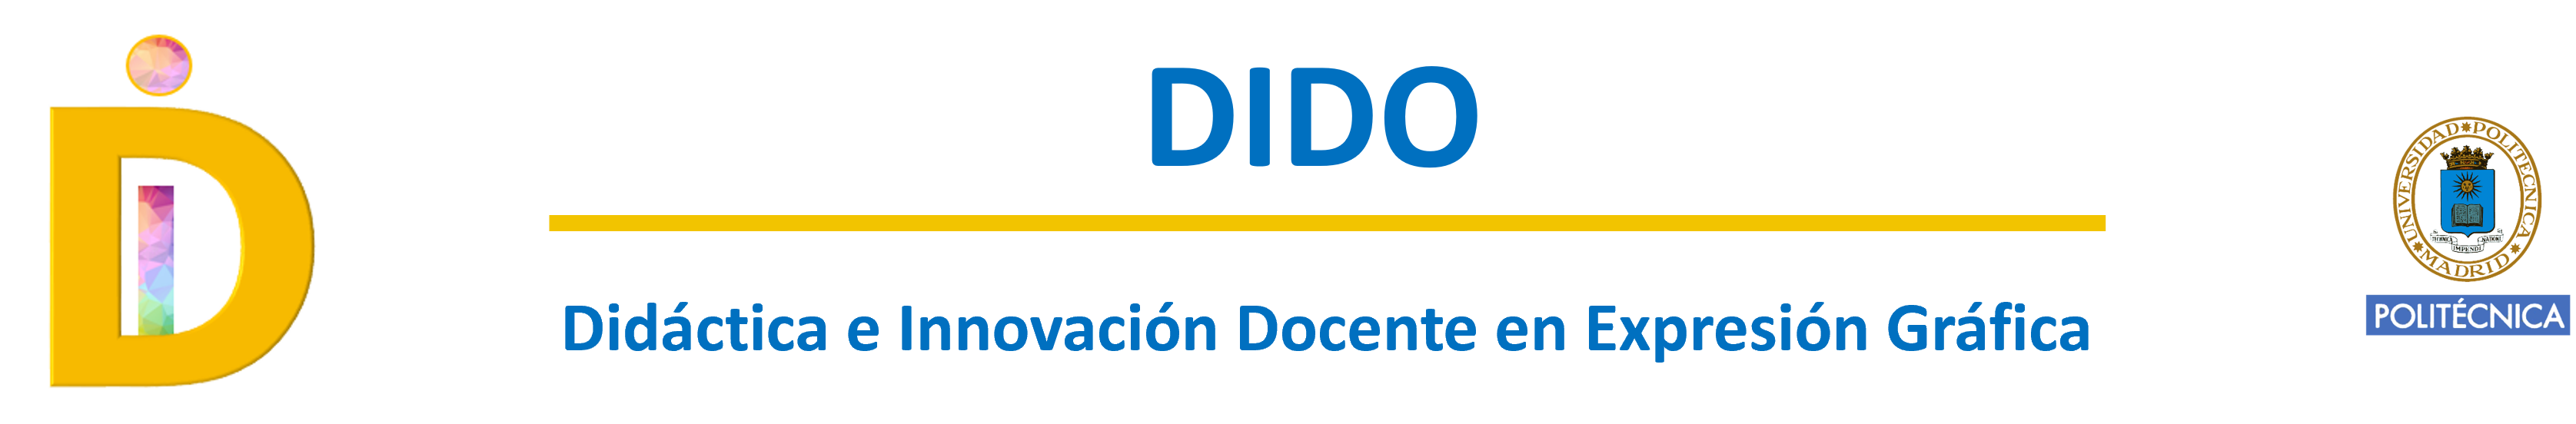 Dido logo